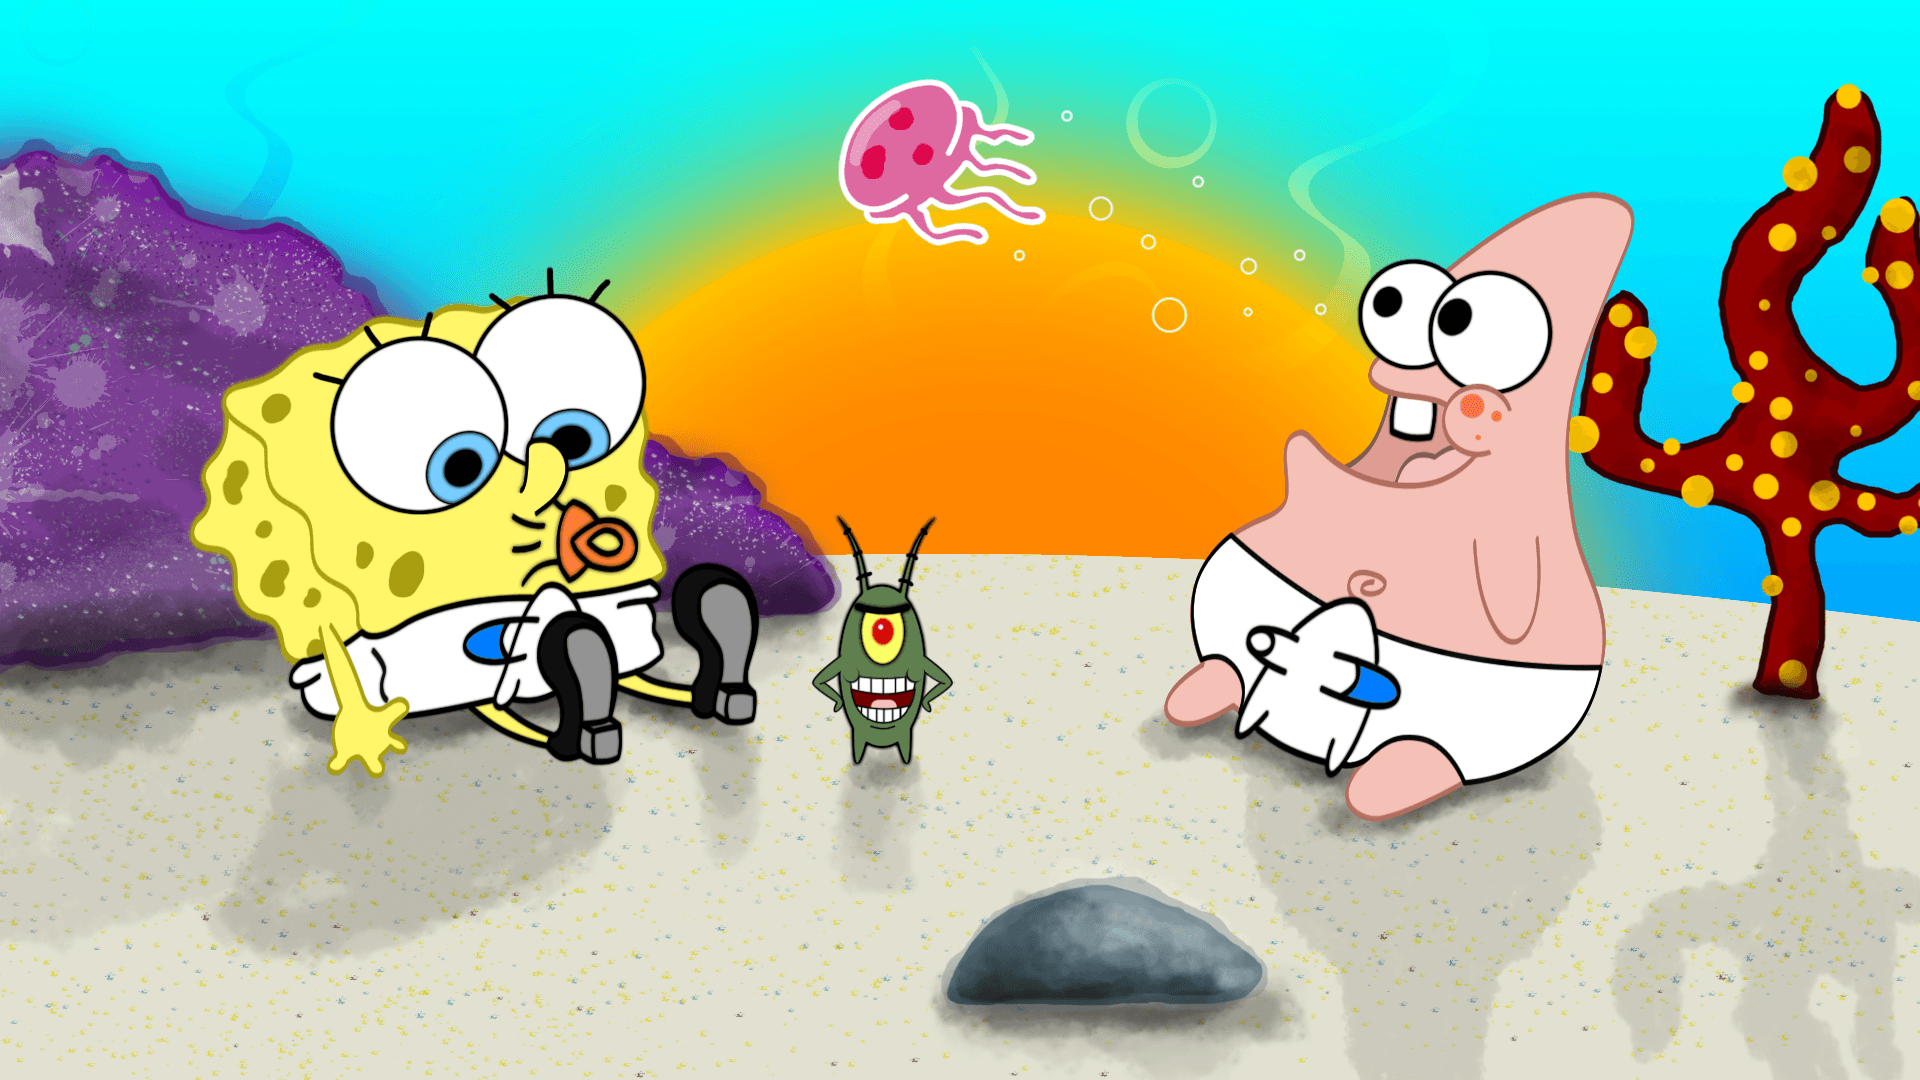 spongebob squarepants baby picture. Spongebob wallpaper, Spongebob squarepants cartoons, Animated cartoon movies